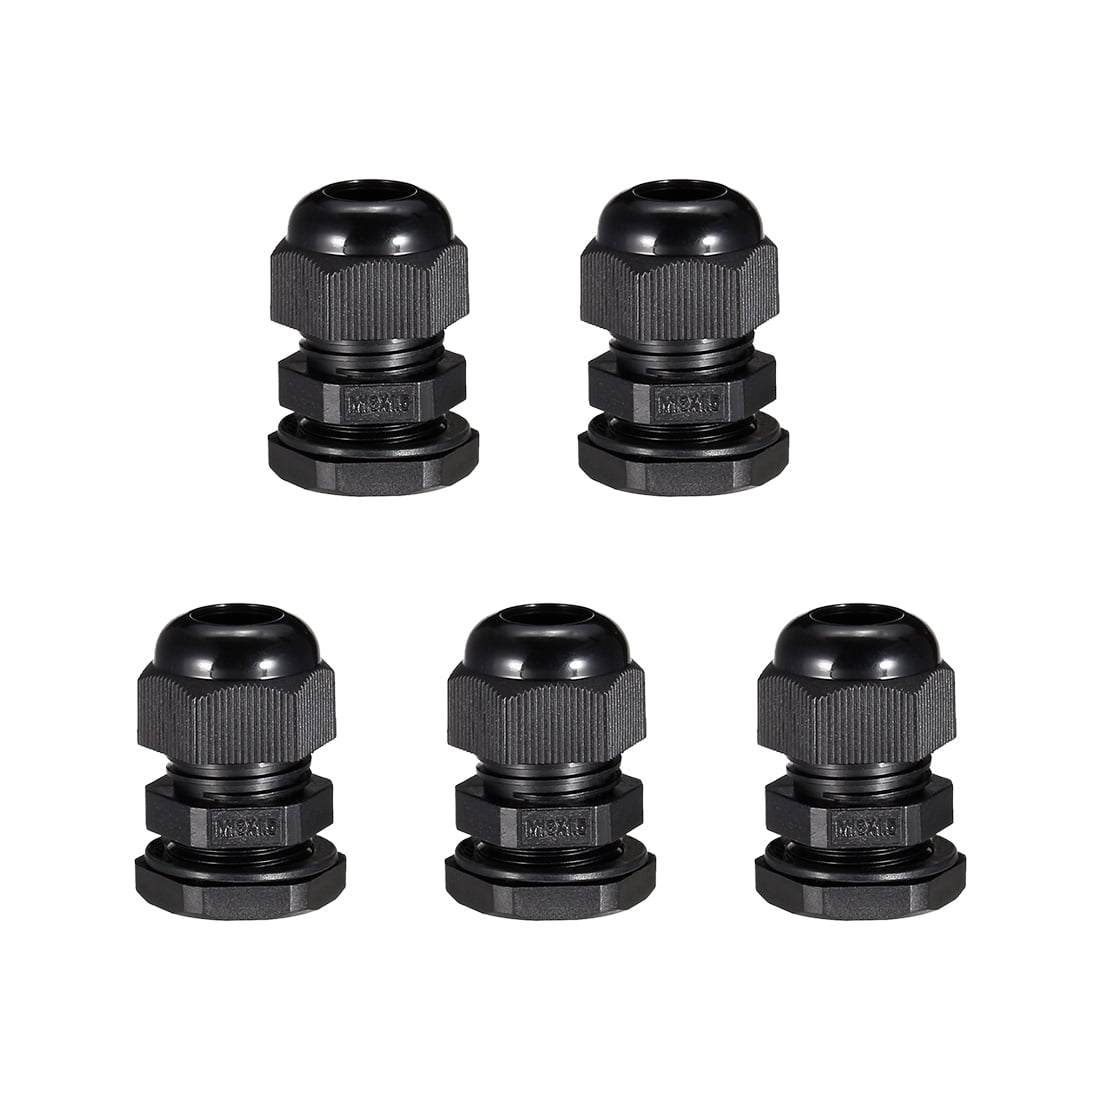 2X Durable Waterproof UV Resistant Black Nylon Connector Grommet 3-6.5mm Dia. 